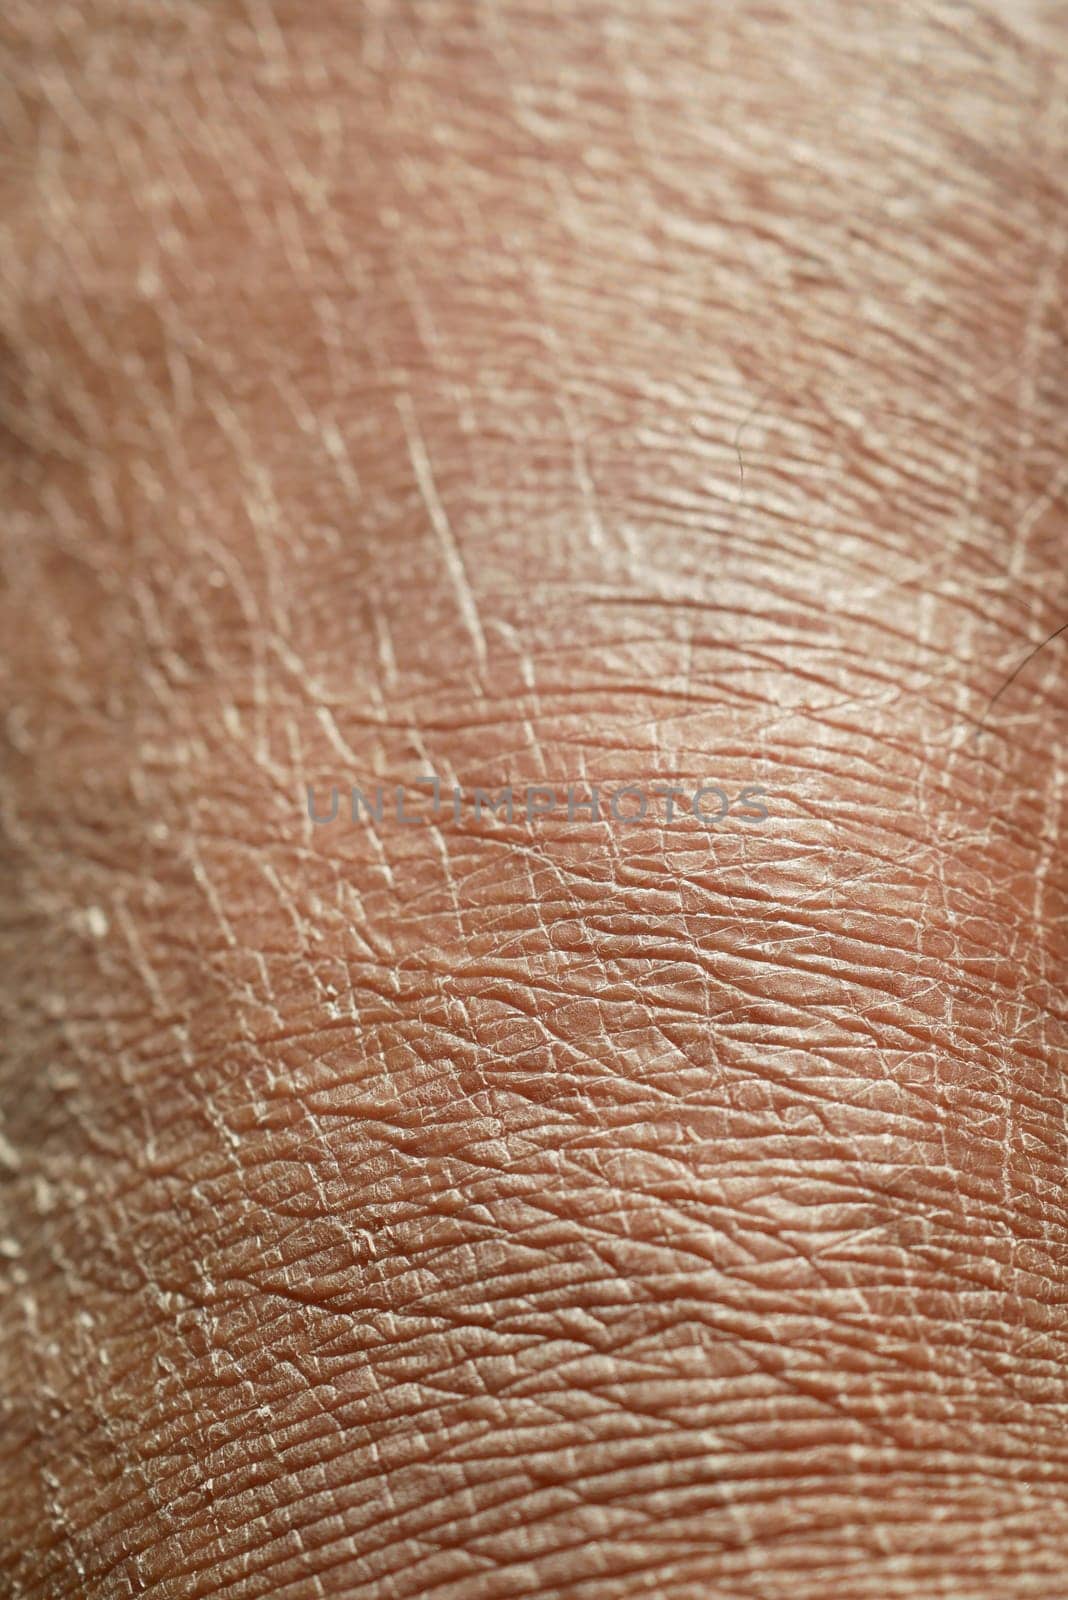 Closeup view of dry human skin . by towfiq007